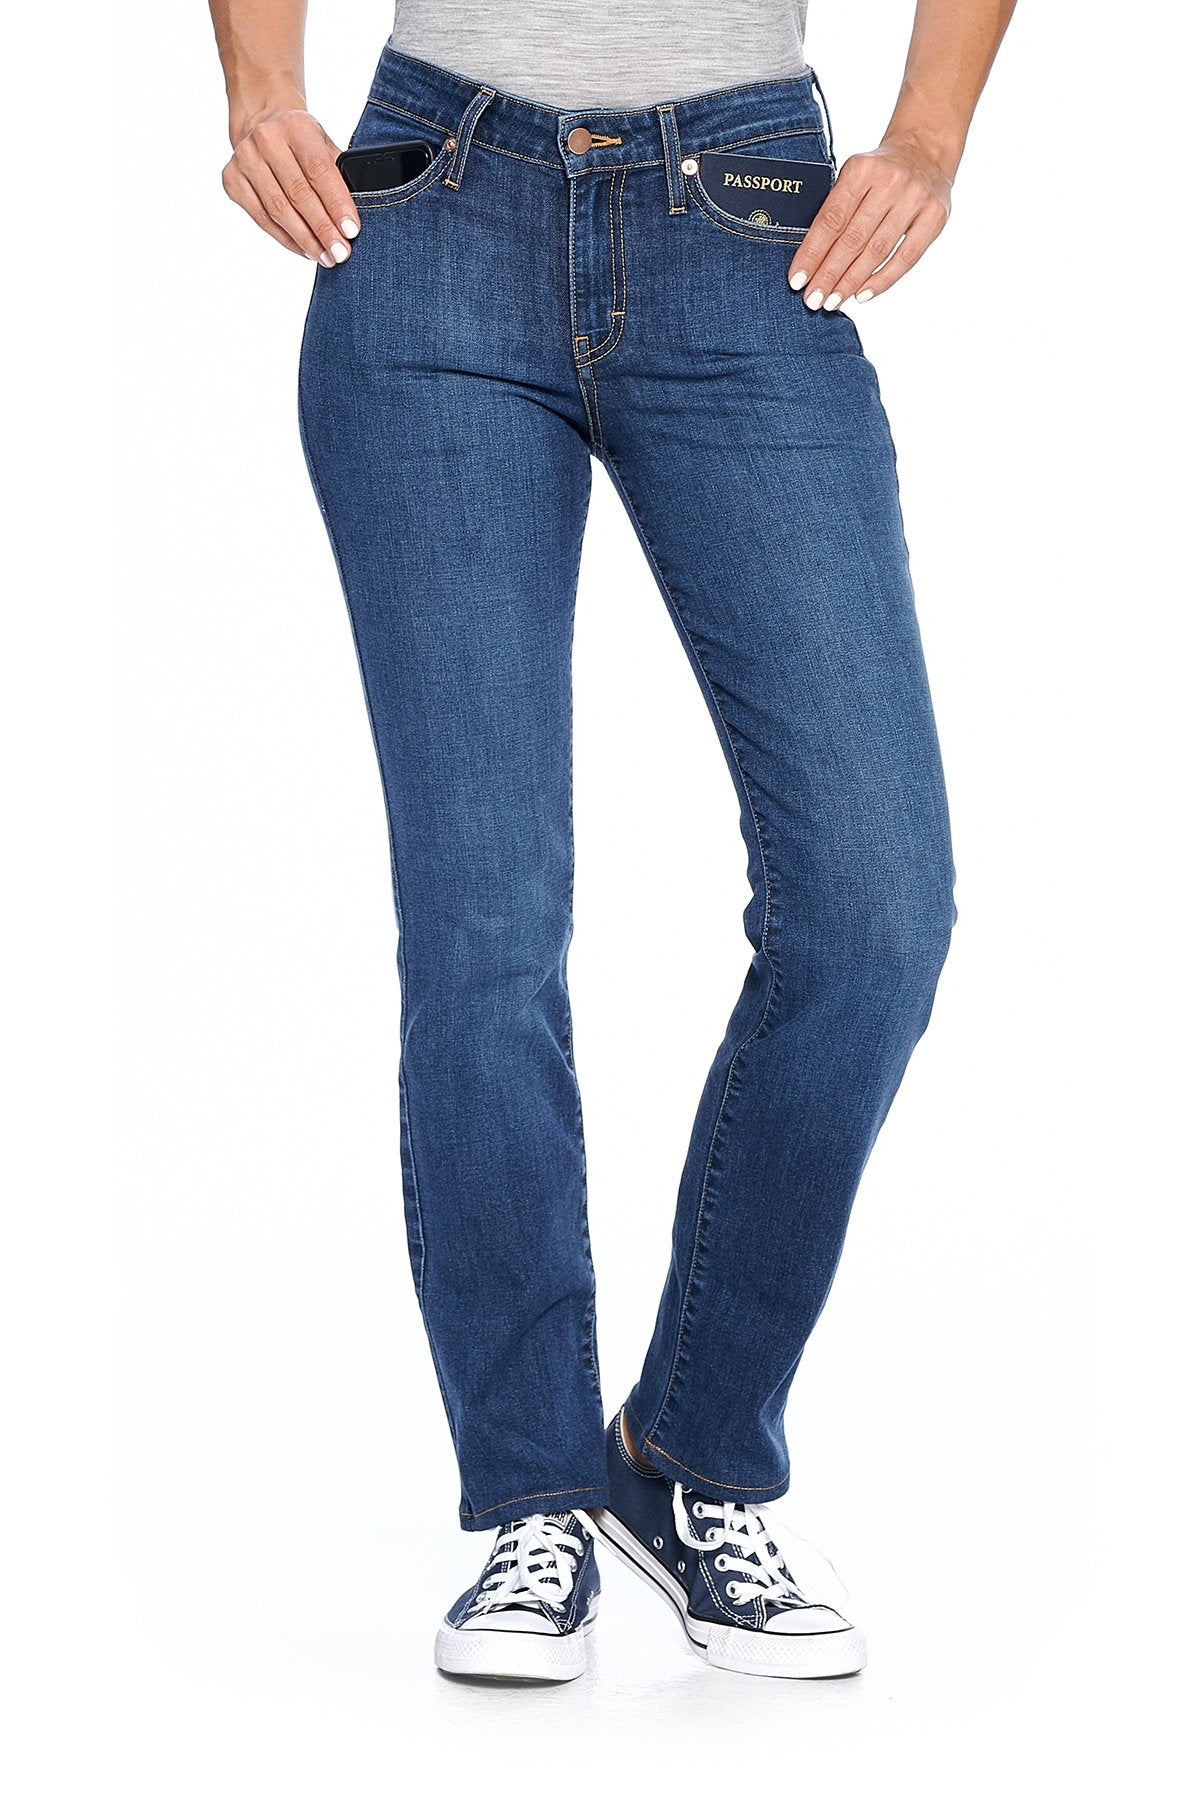 Medium indigo fly straight travel jeans for women by Aviator.